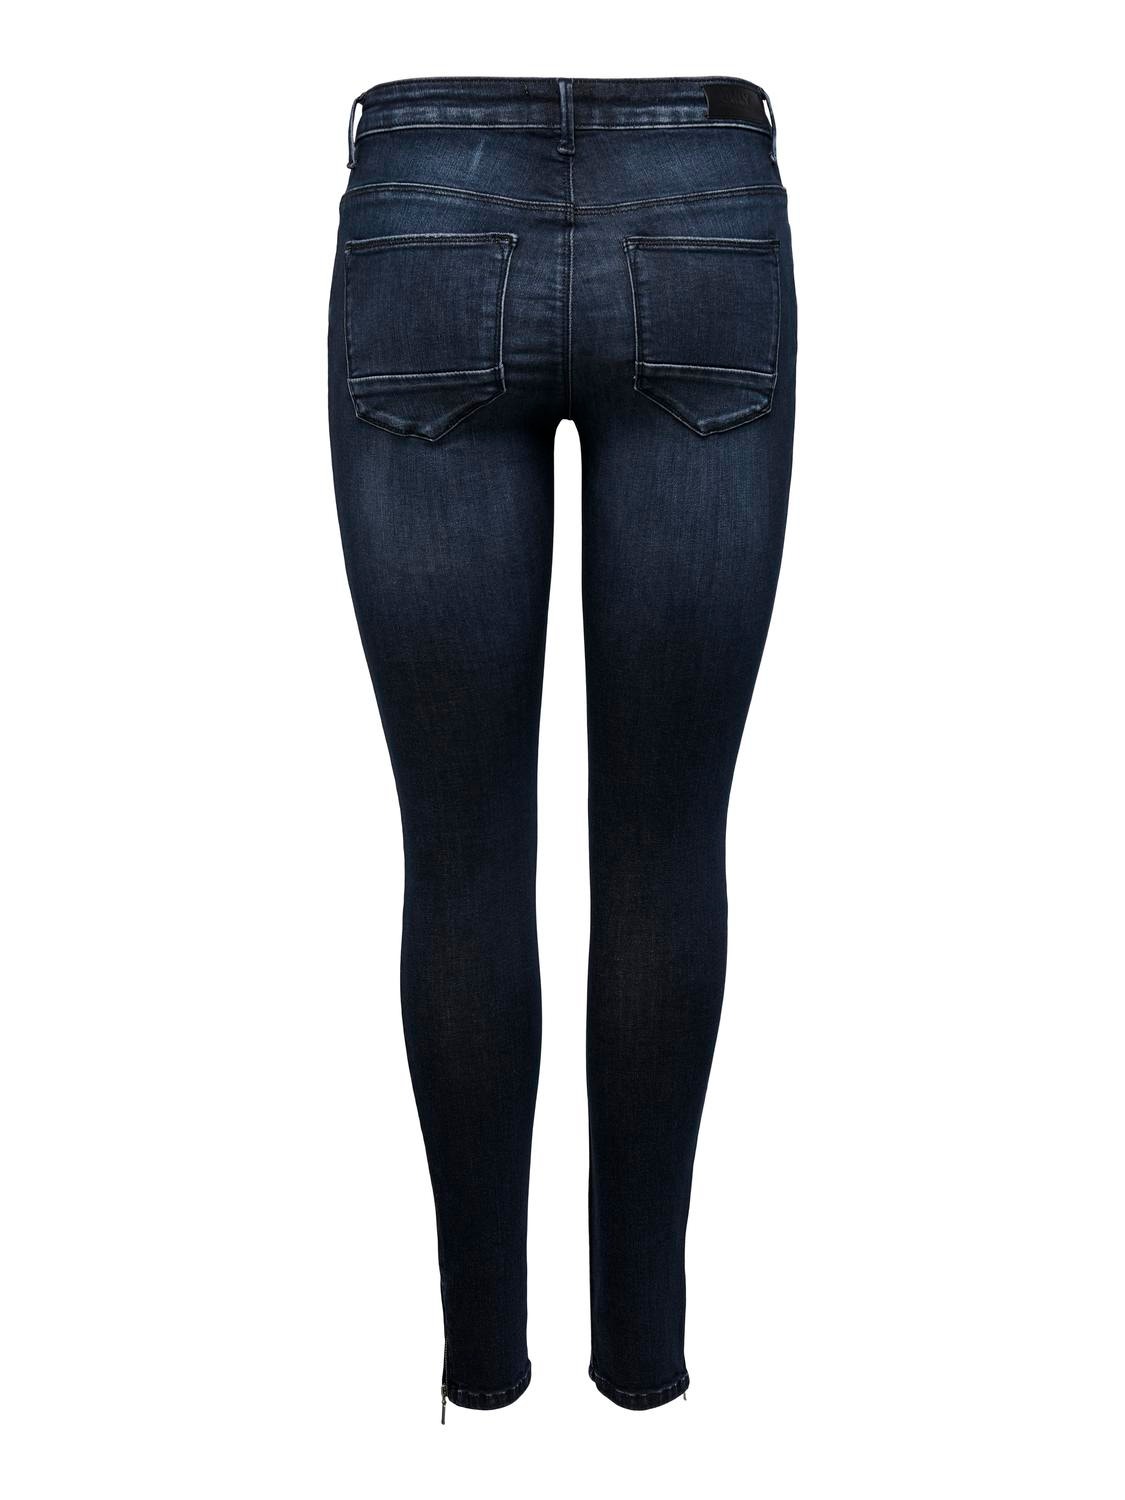 ONLY Jeans Skinny Fit Taille moyenne Fermeture éclair au bas de jambe -Dark Blue Denim - 15209349